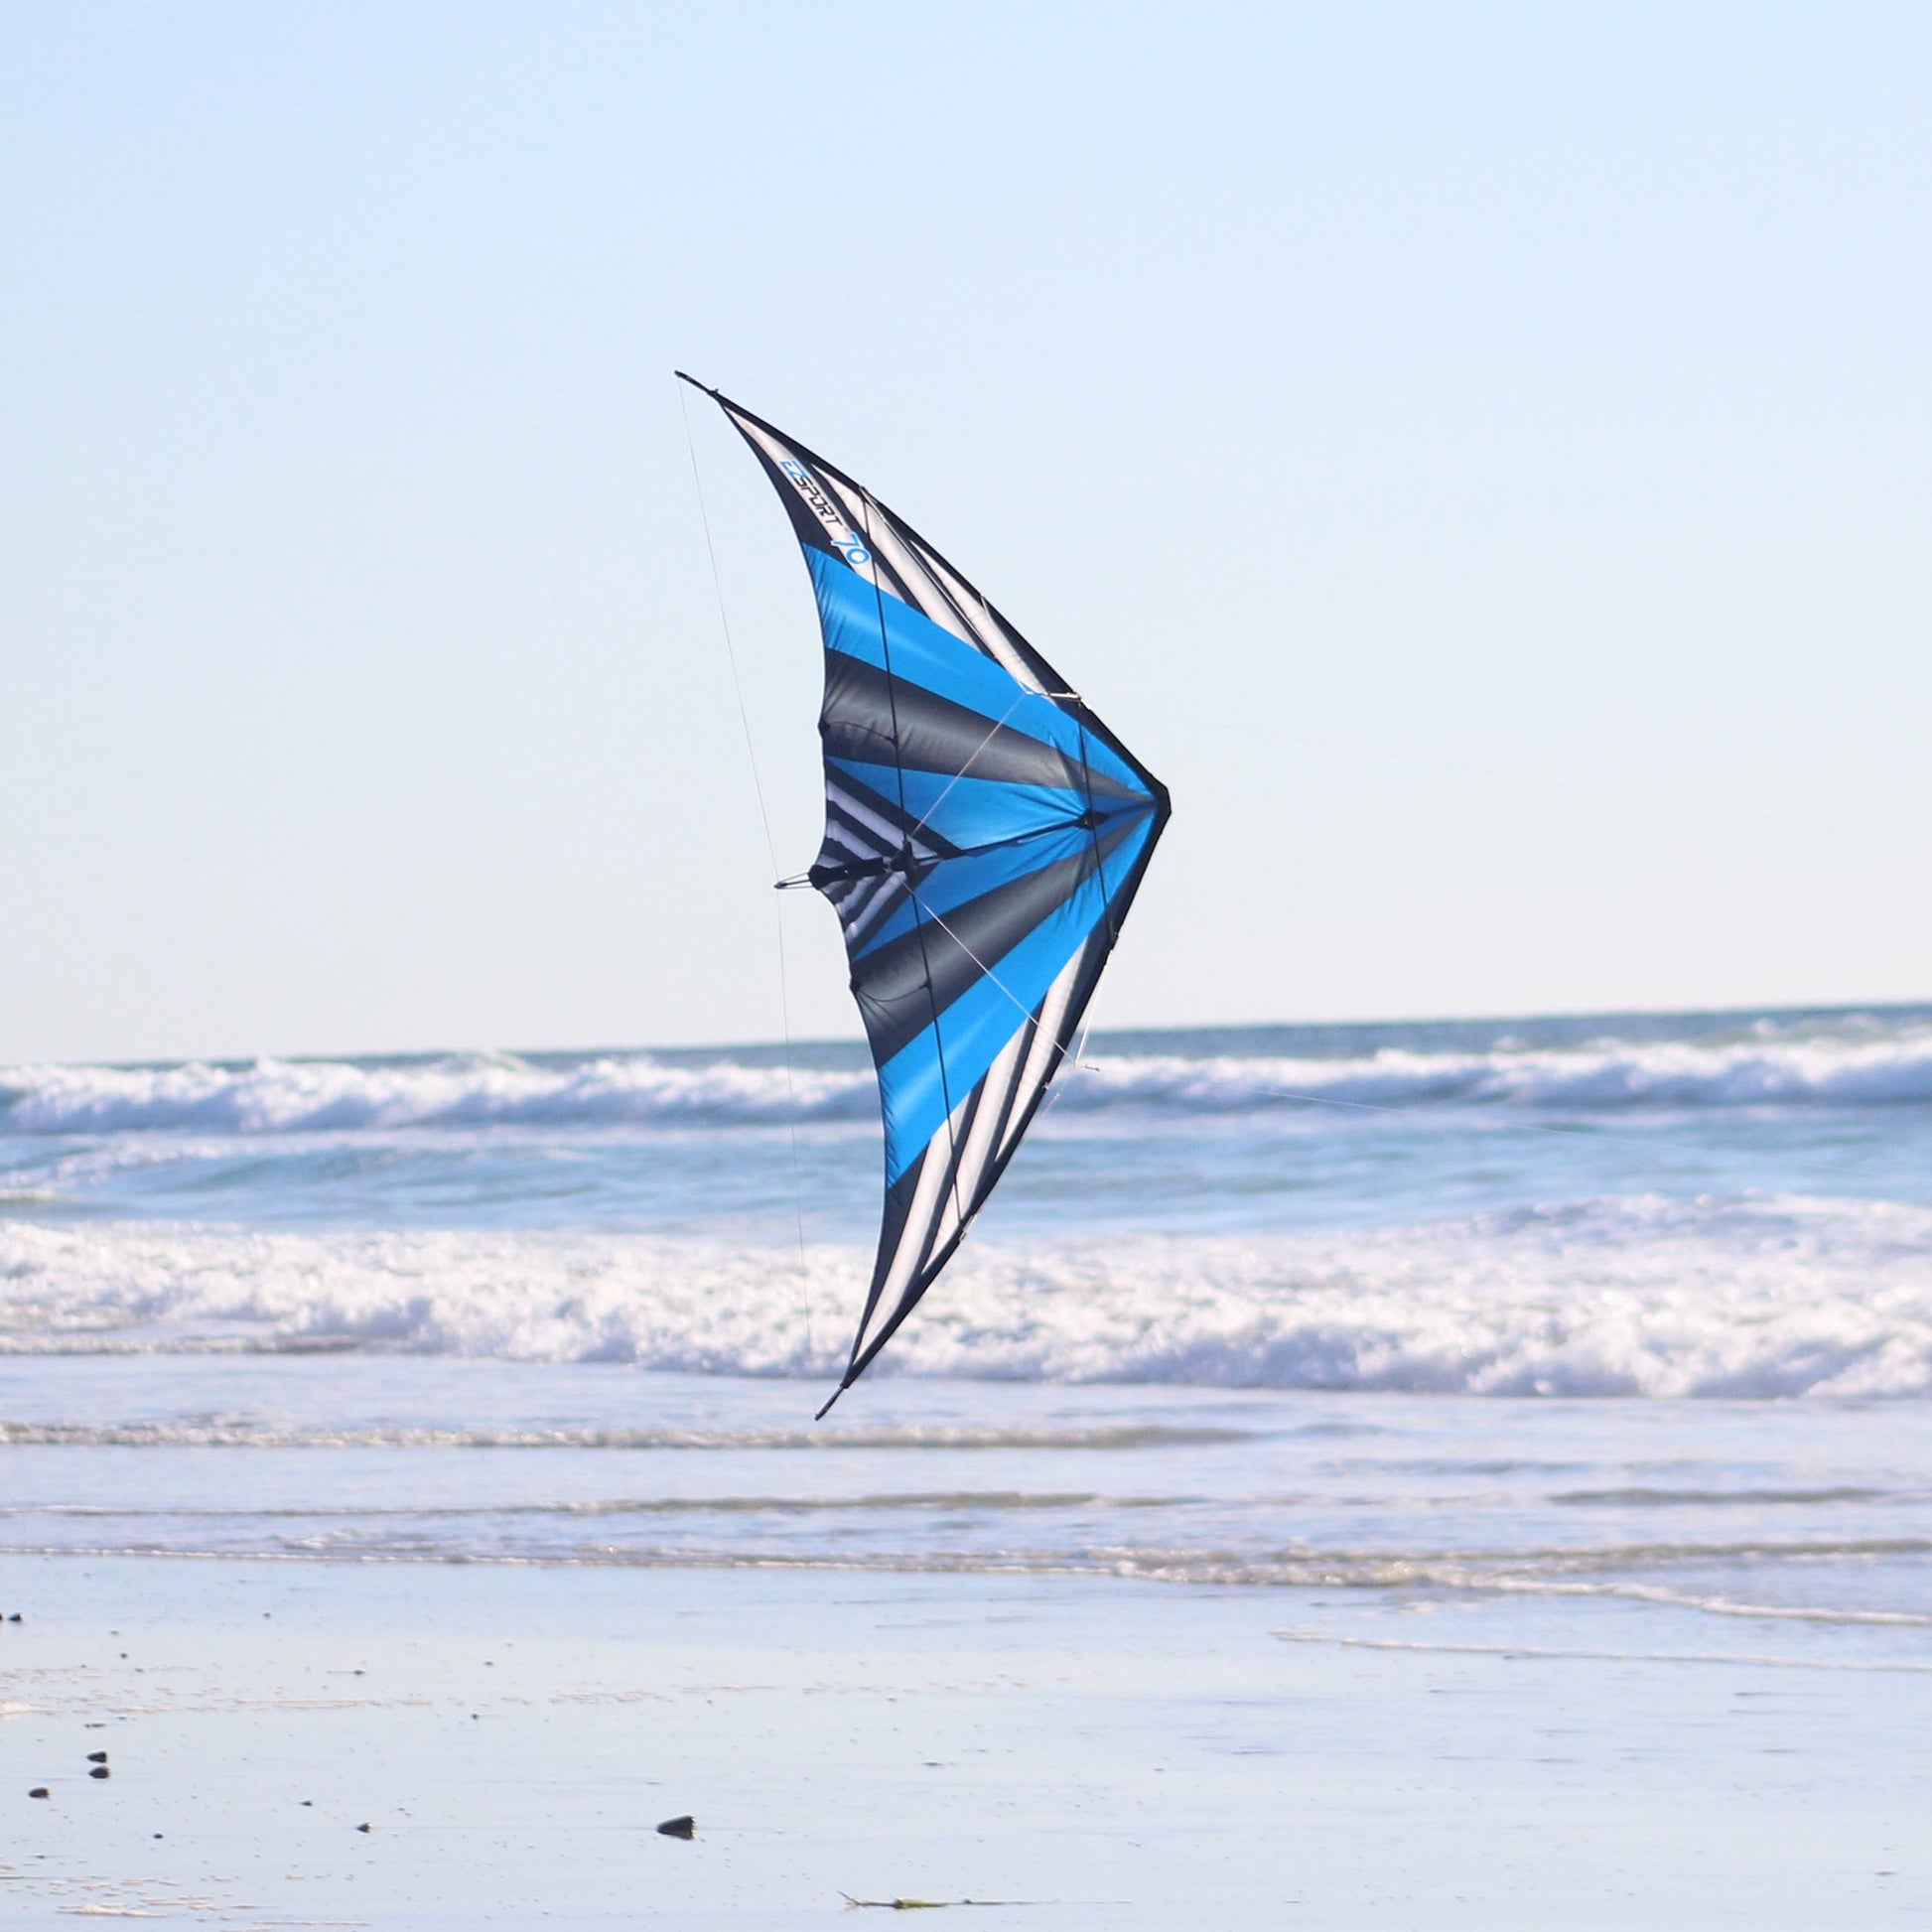 WindNSun EZ Sport 70 Dual Control Sport Kite Blue Stripe Nylon Kite photo of product in use